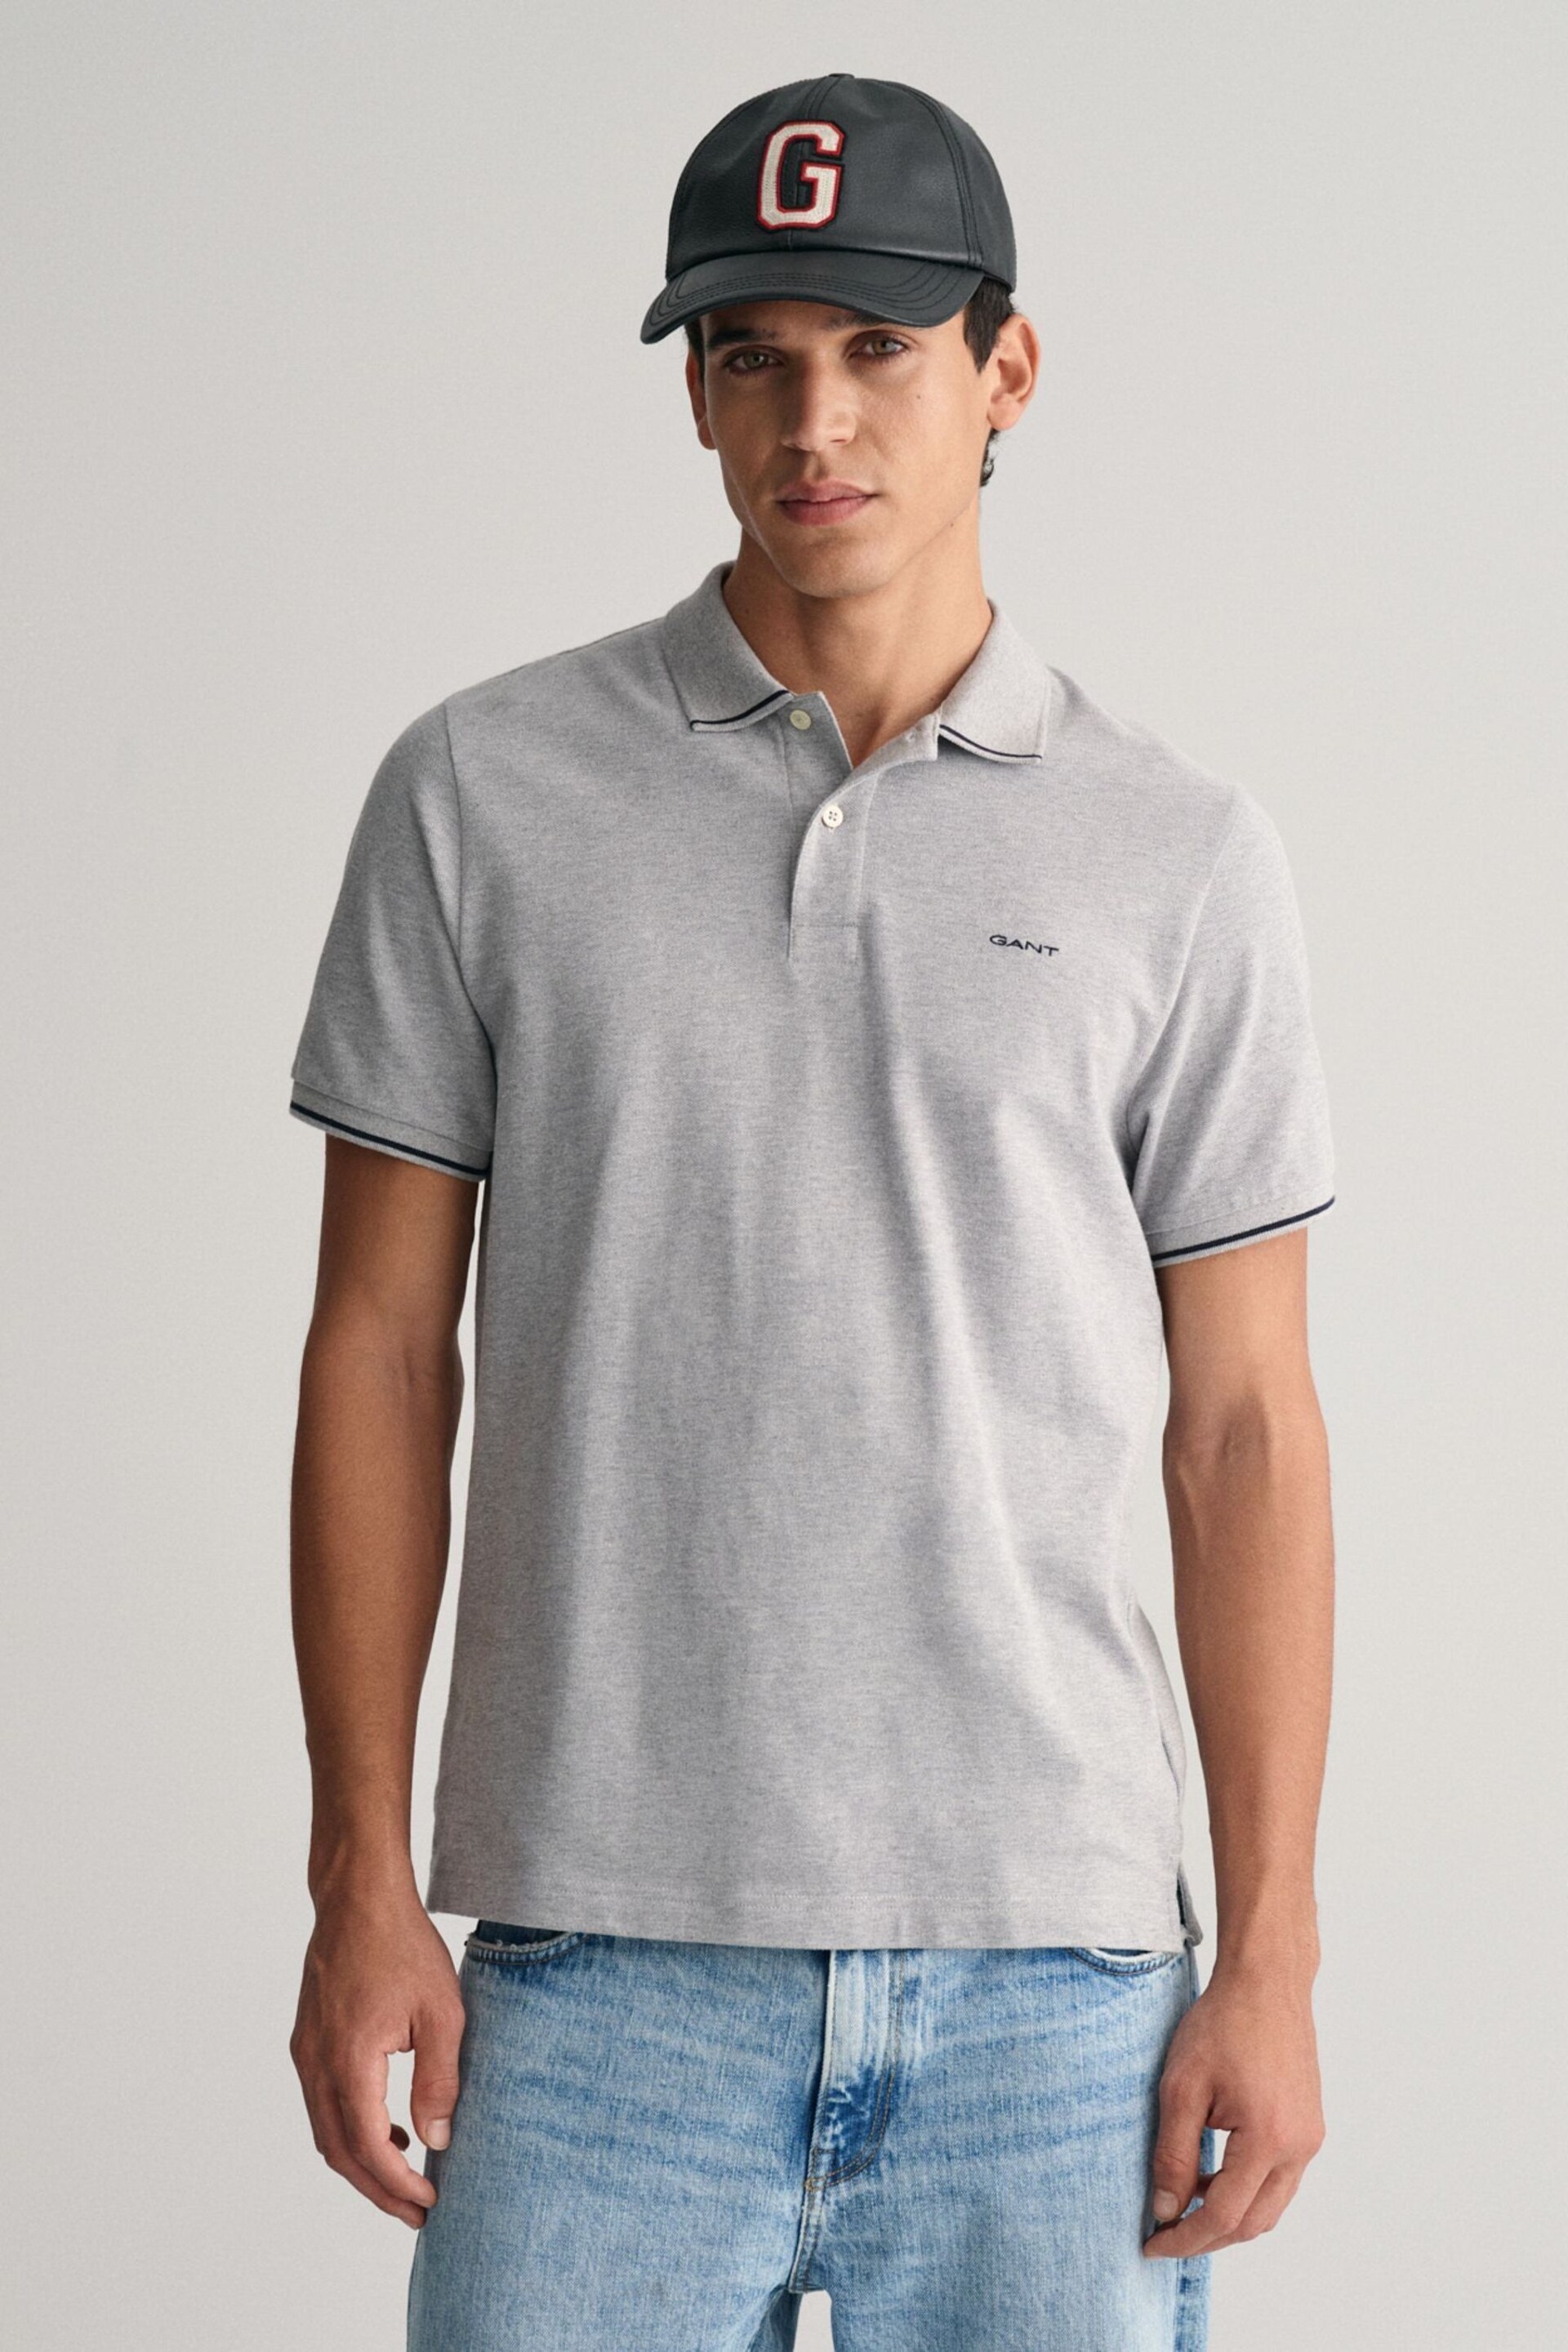 GANT Grey Tipped Piqué Polo Shirt - Image 1 of 5